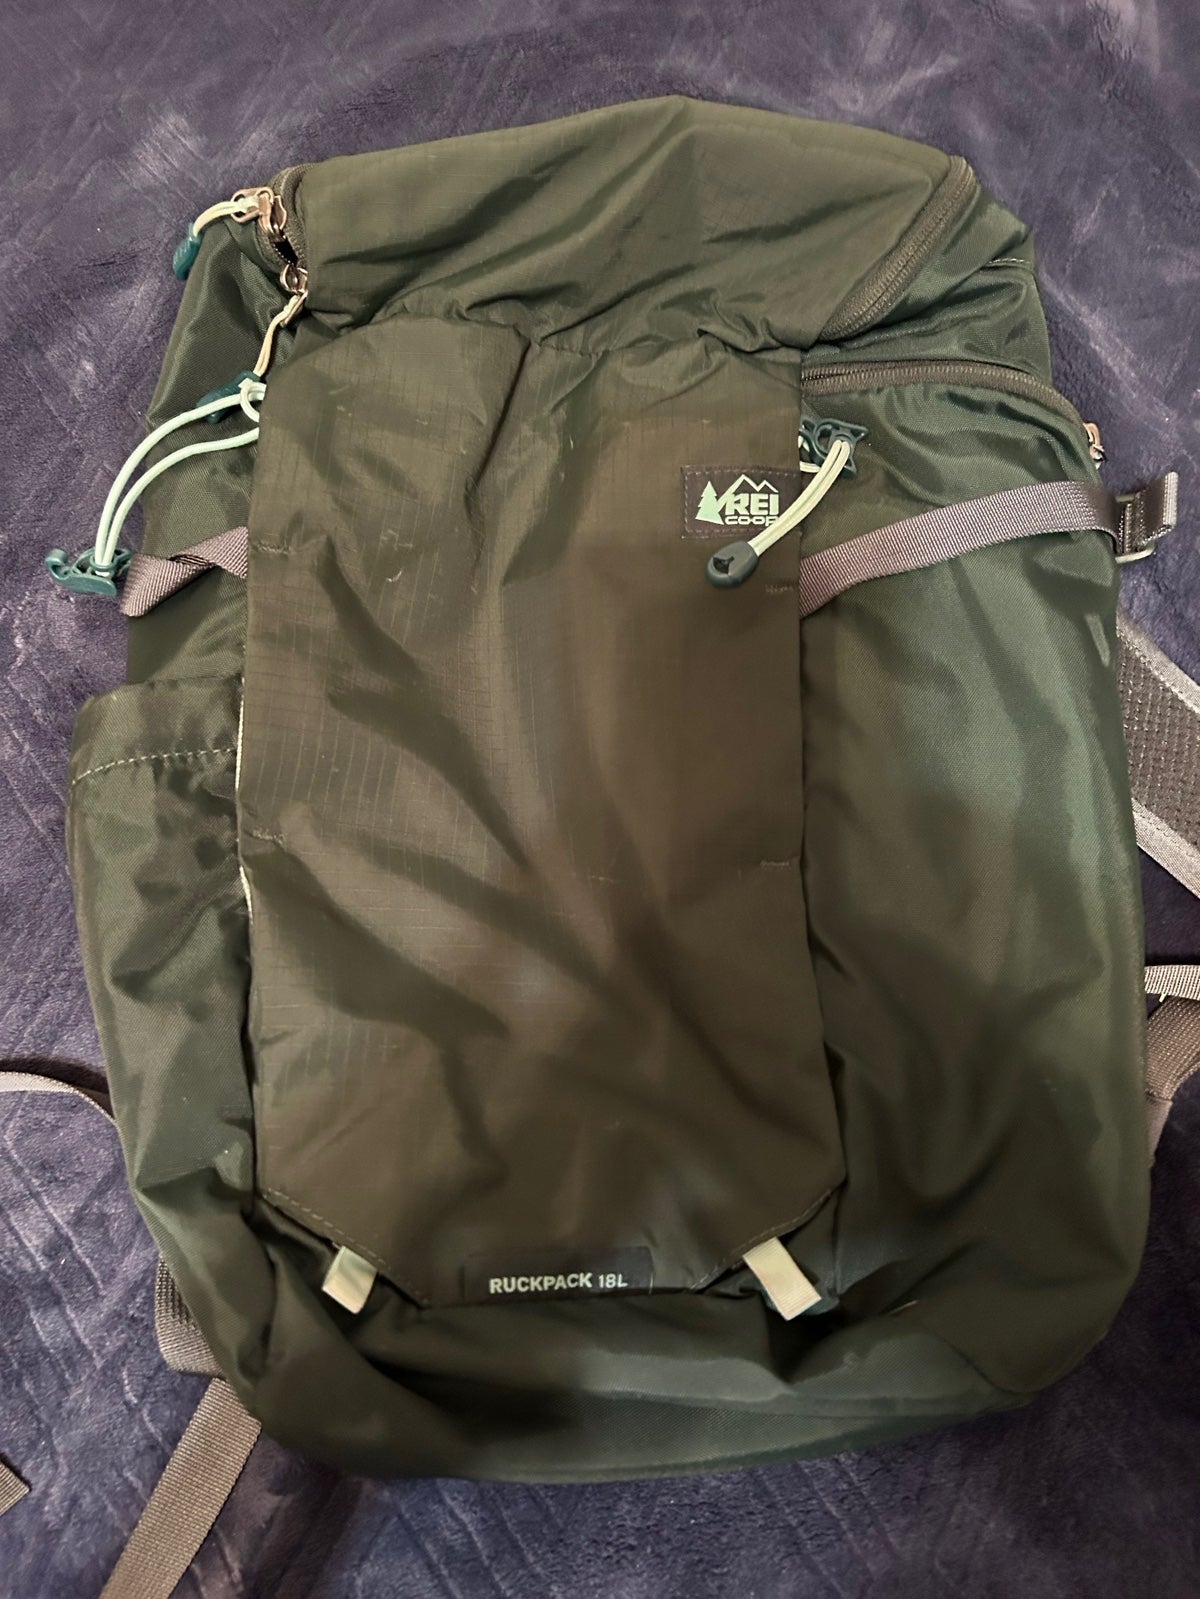 REI Co-op Ruckpack 18L Daypack Backpack Green - TESSHANDBAG